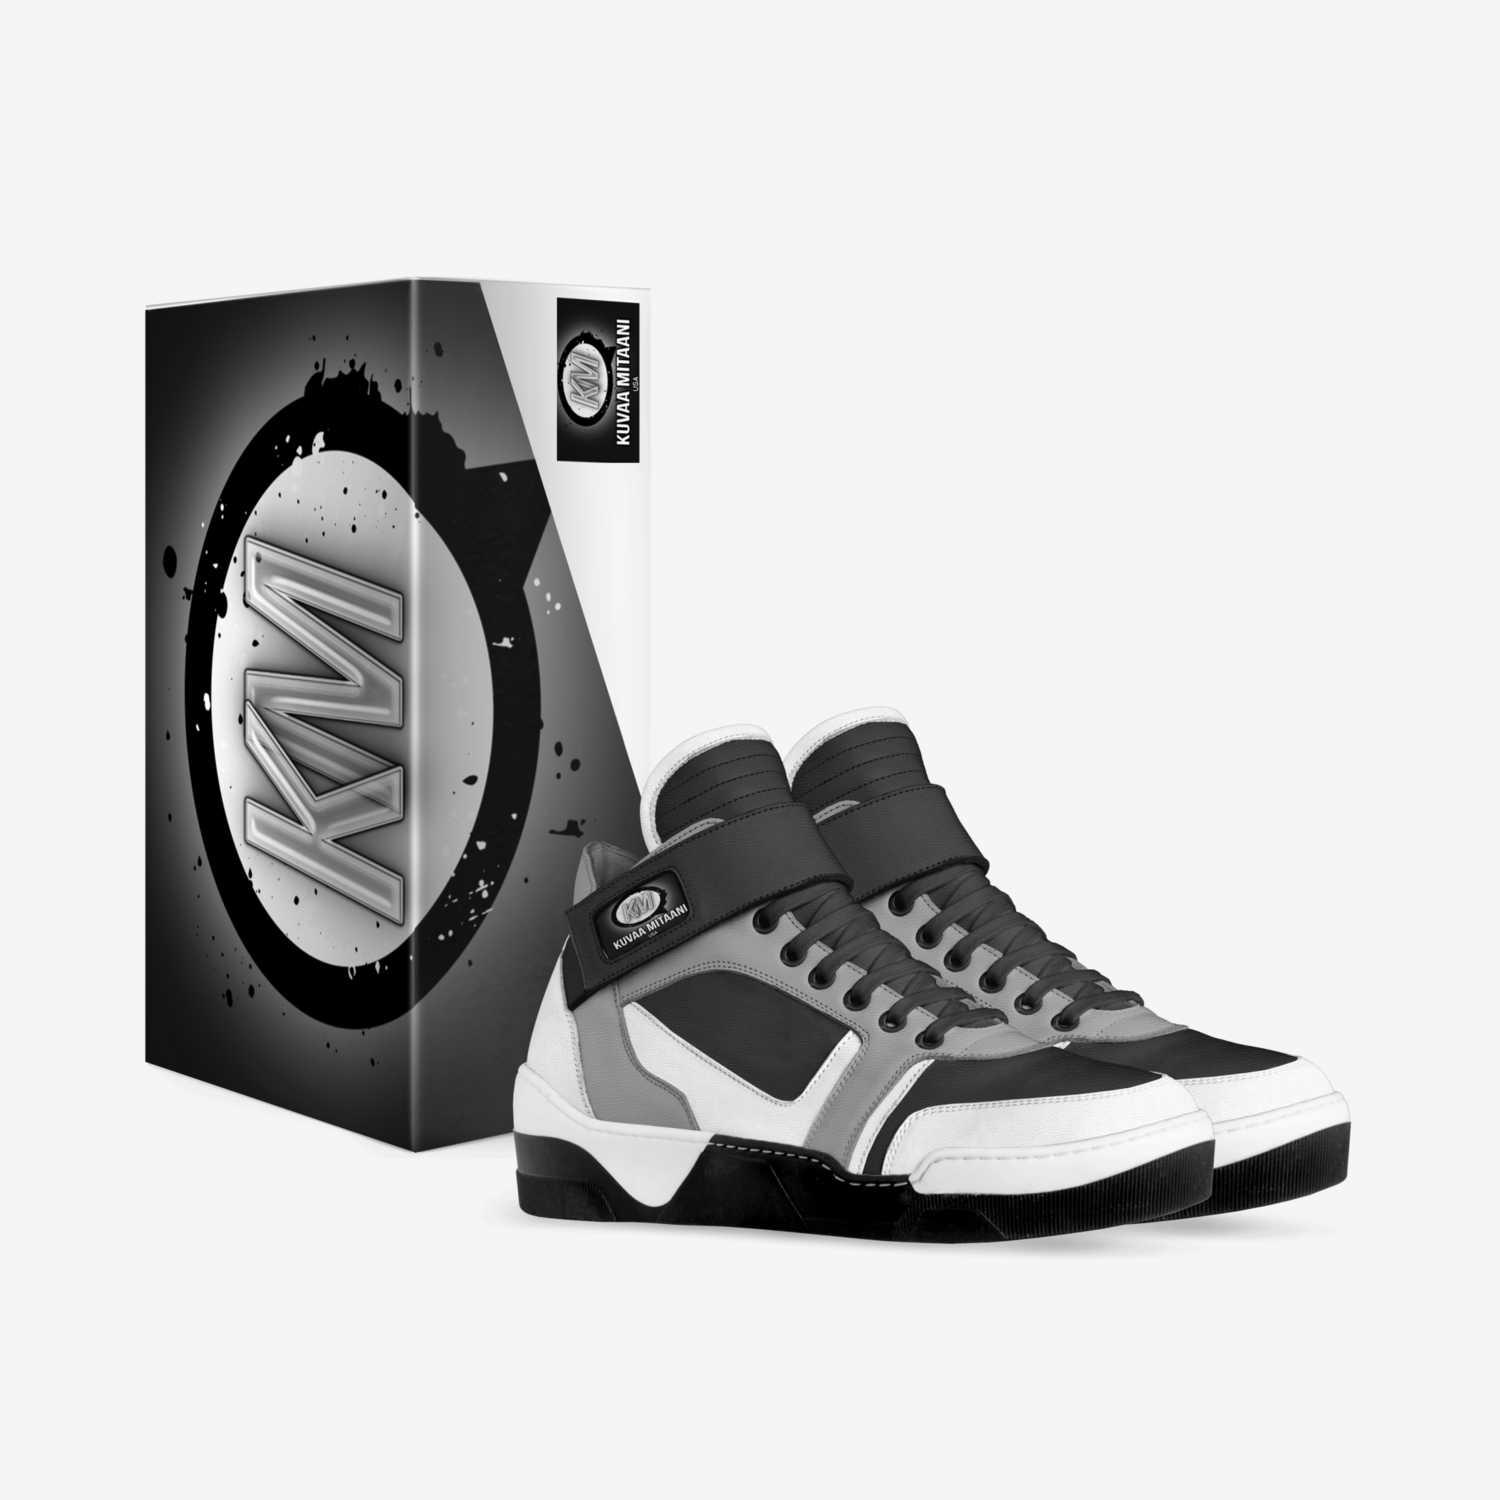 kuvaa mitaani USA custom made in Italy shoes by Antwain Bailey | Box view